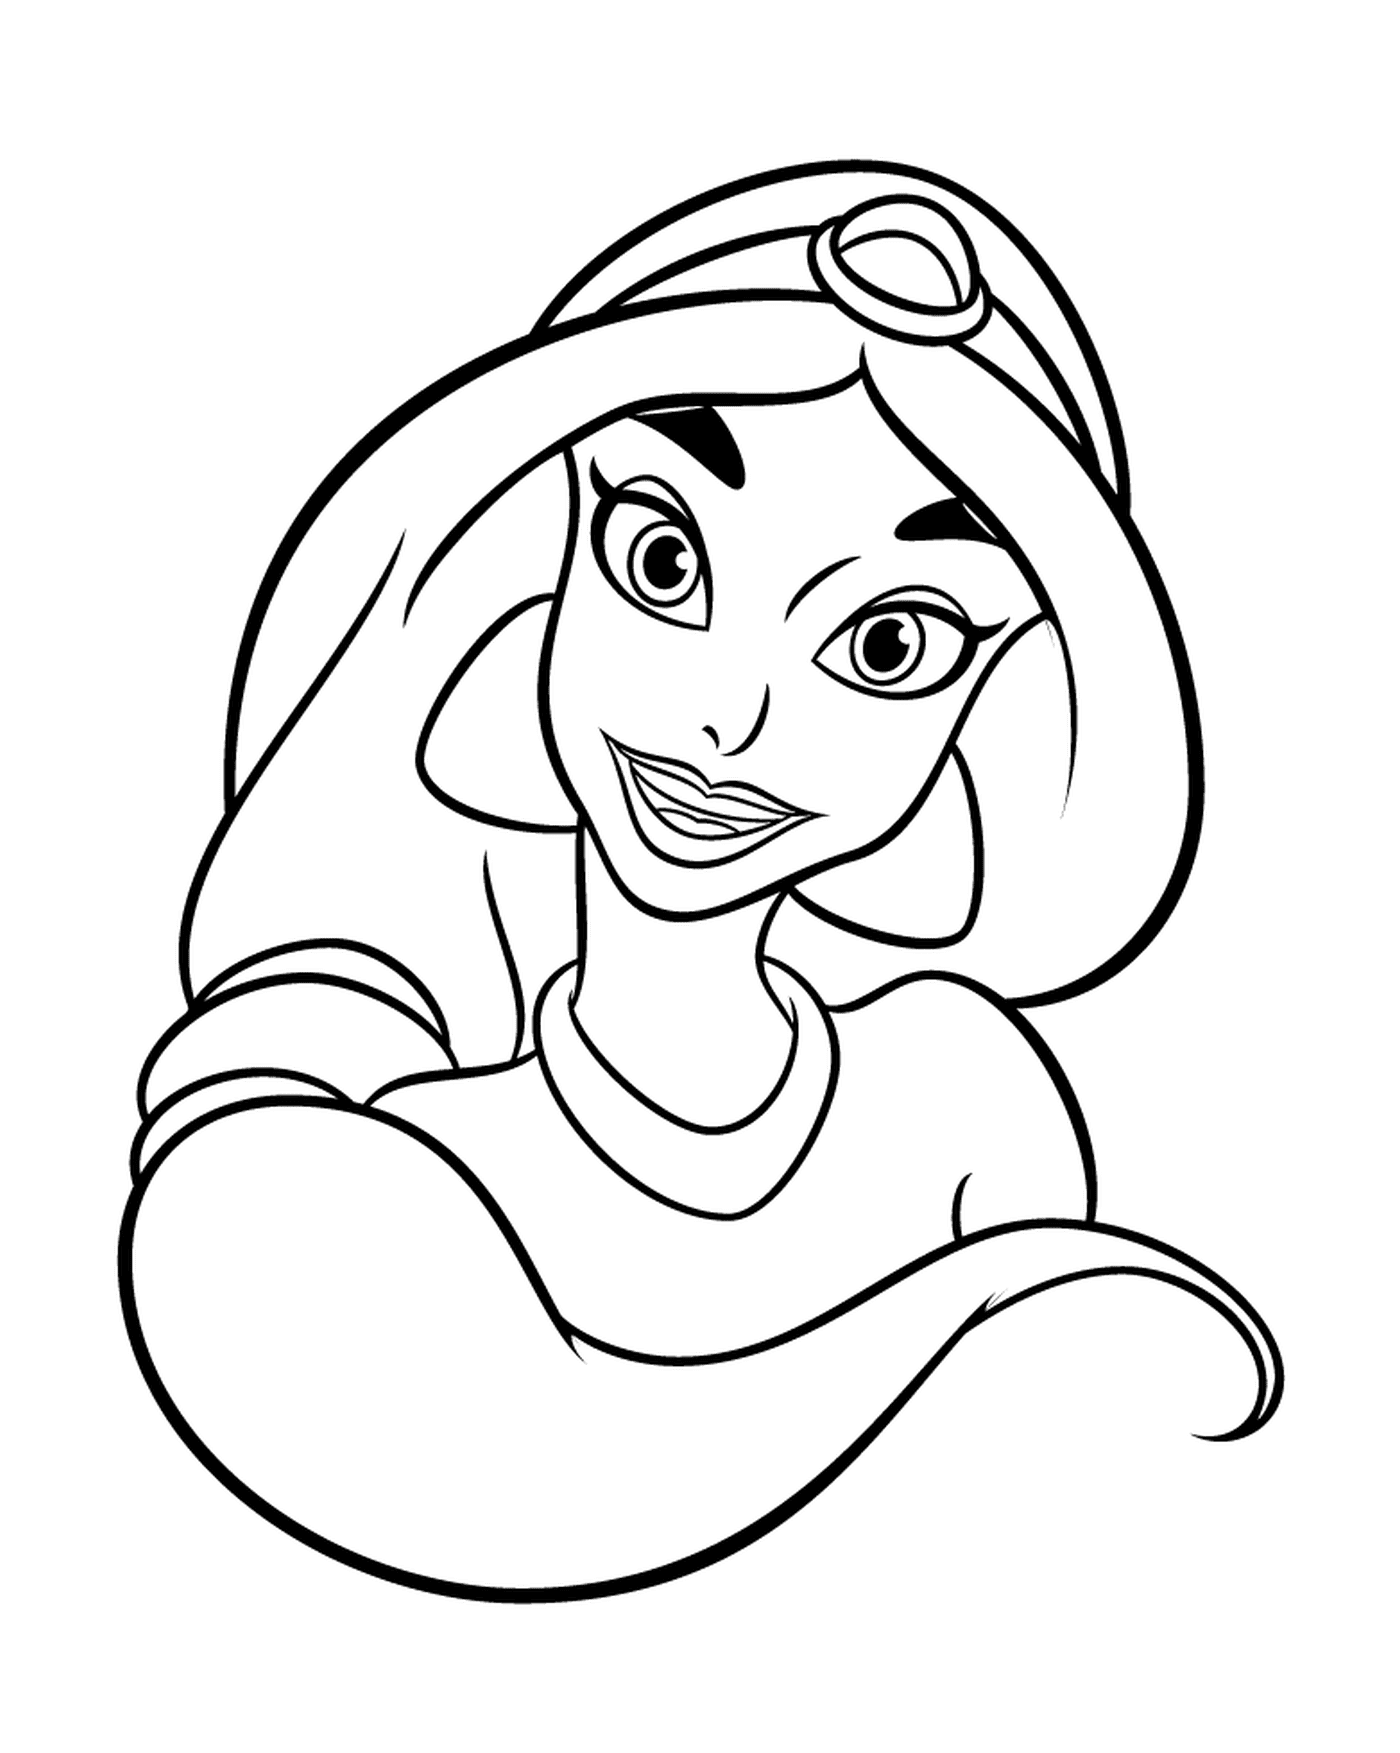  Jasmine from Disney Princesses 